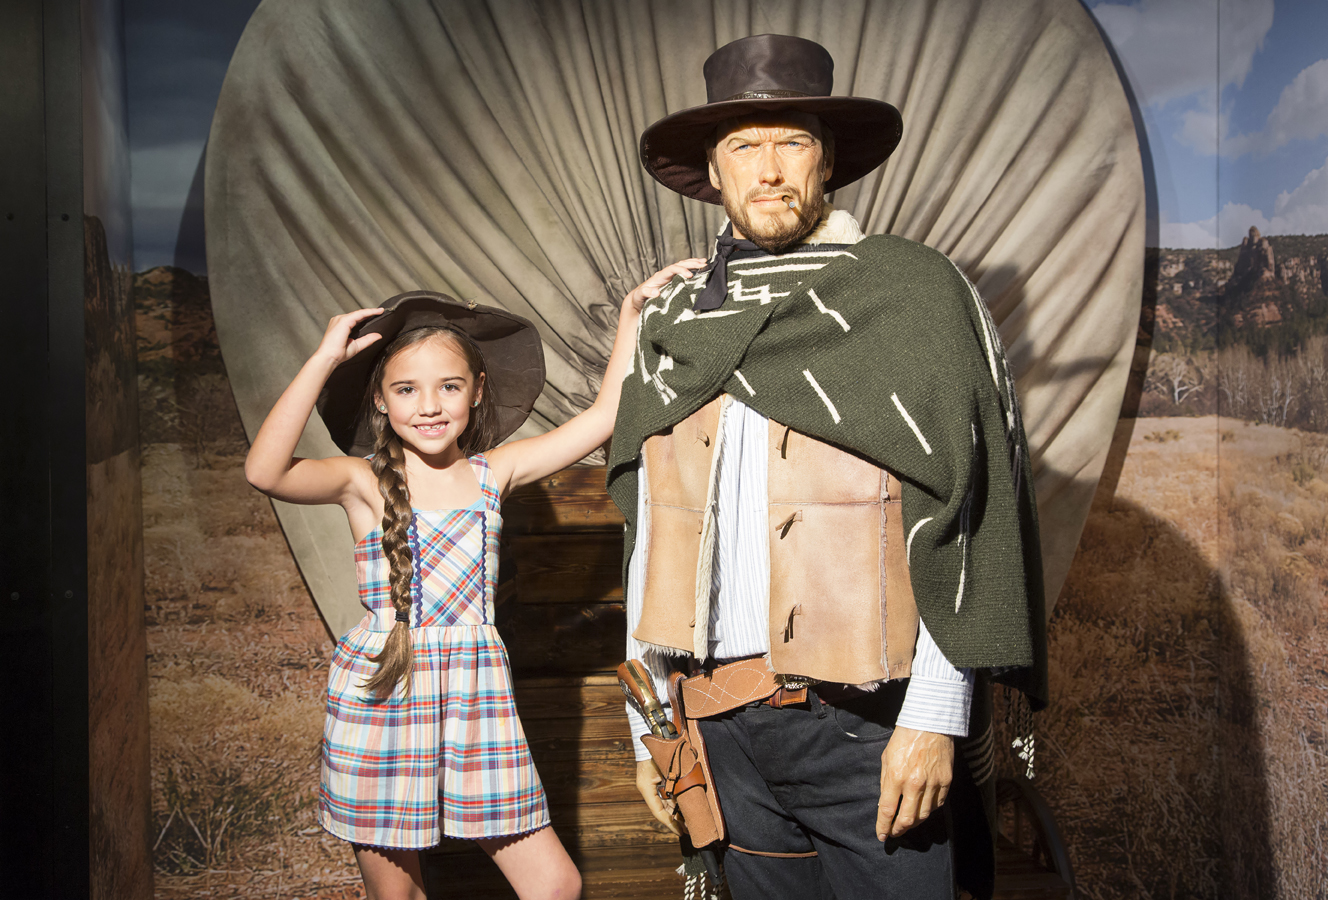 PHOTO_HWMB_HWMH_HWMPF_HWMMB_Clint-Eastwood-with-Little-Girl.jpg